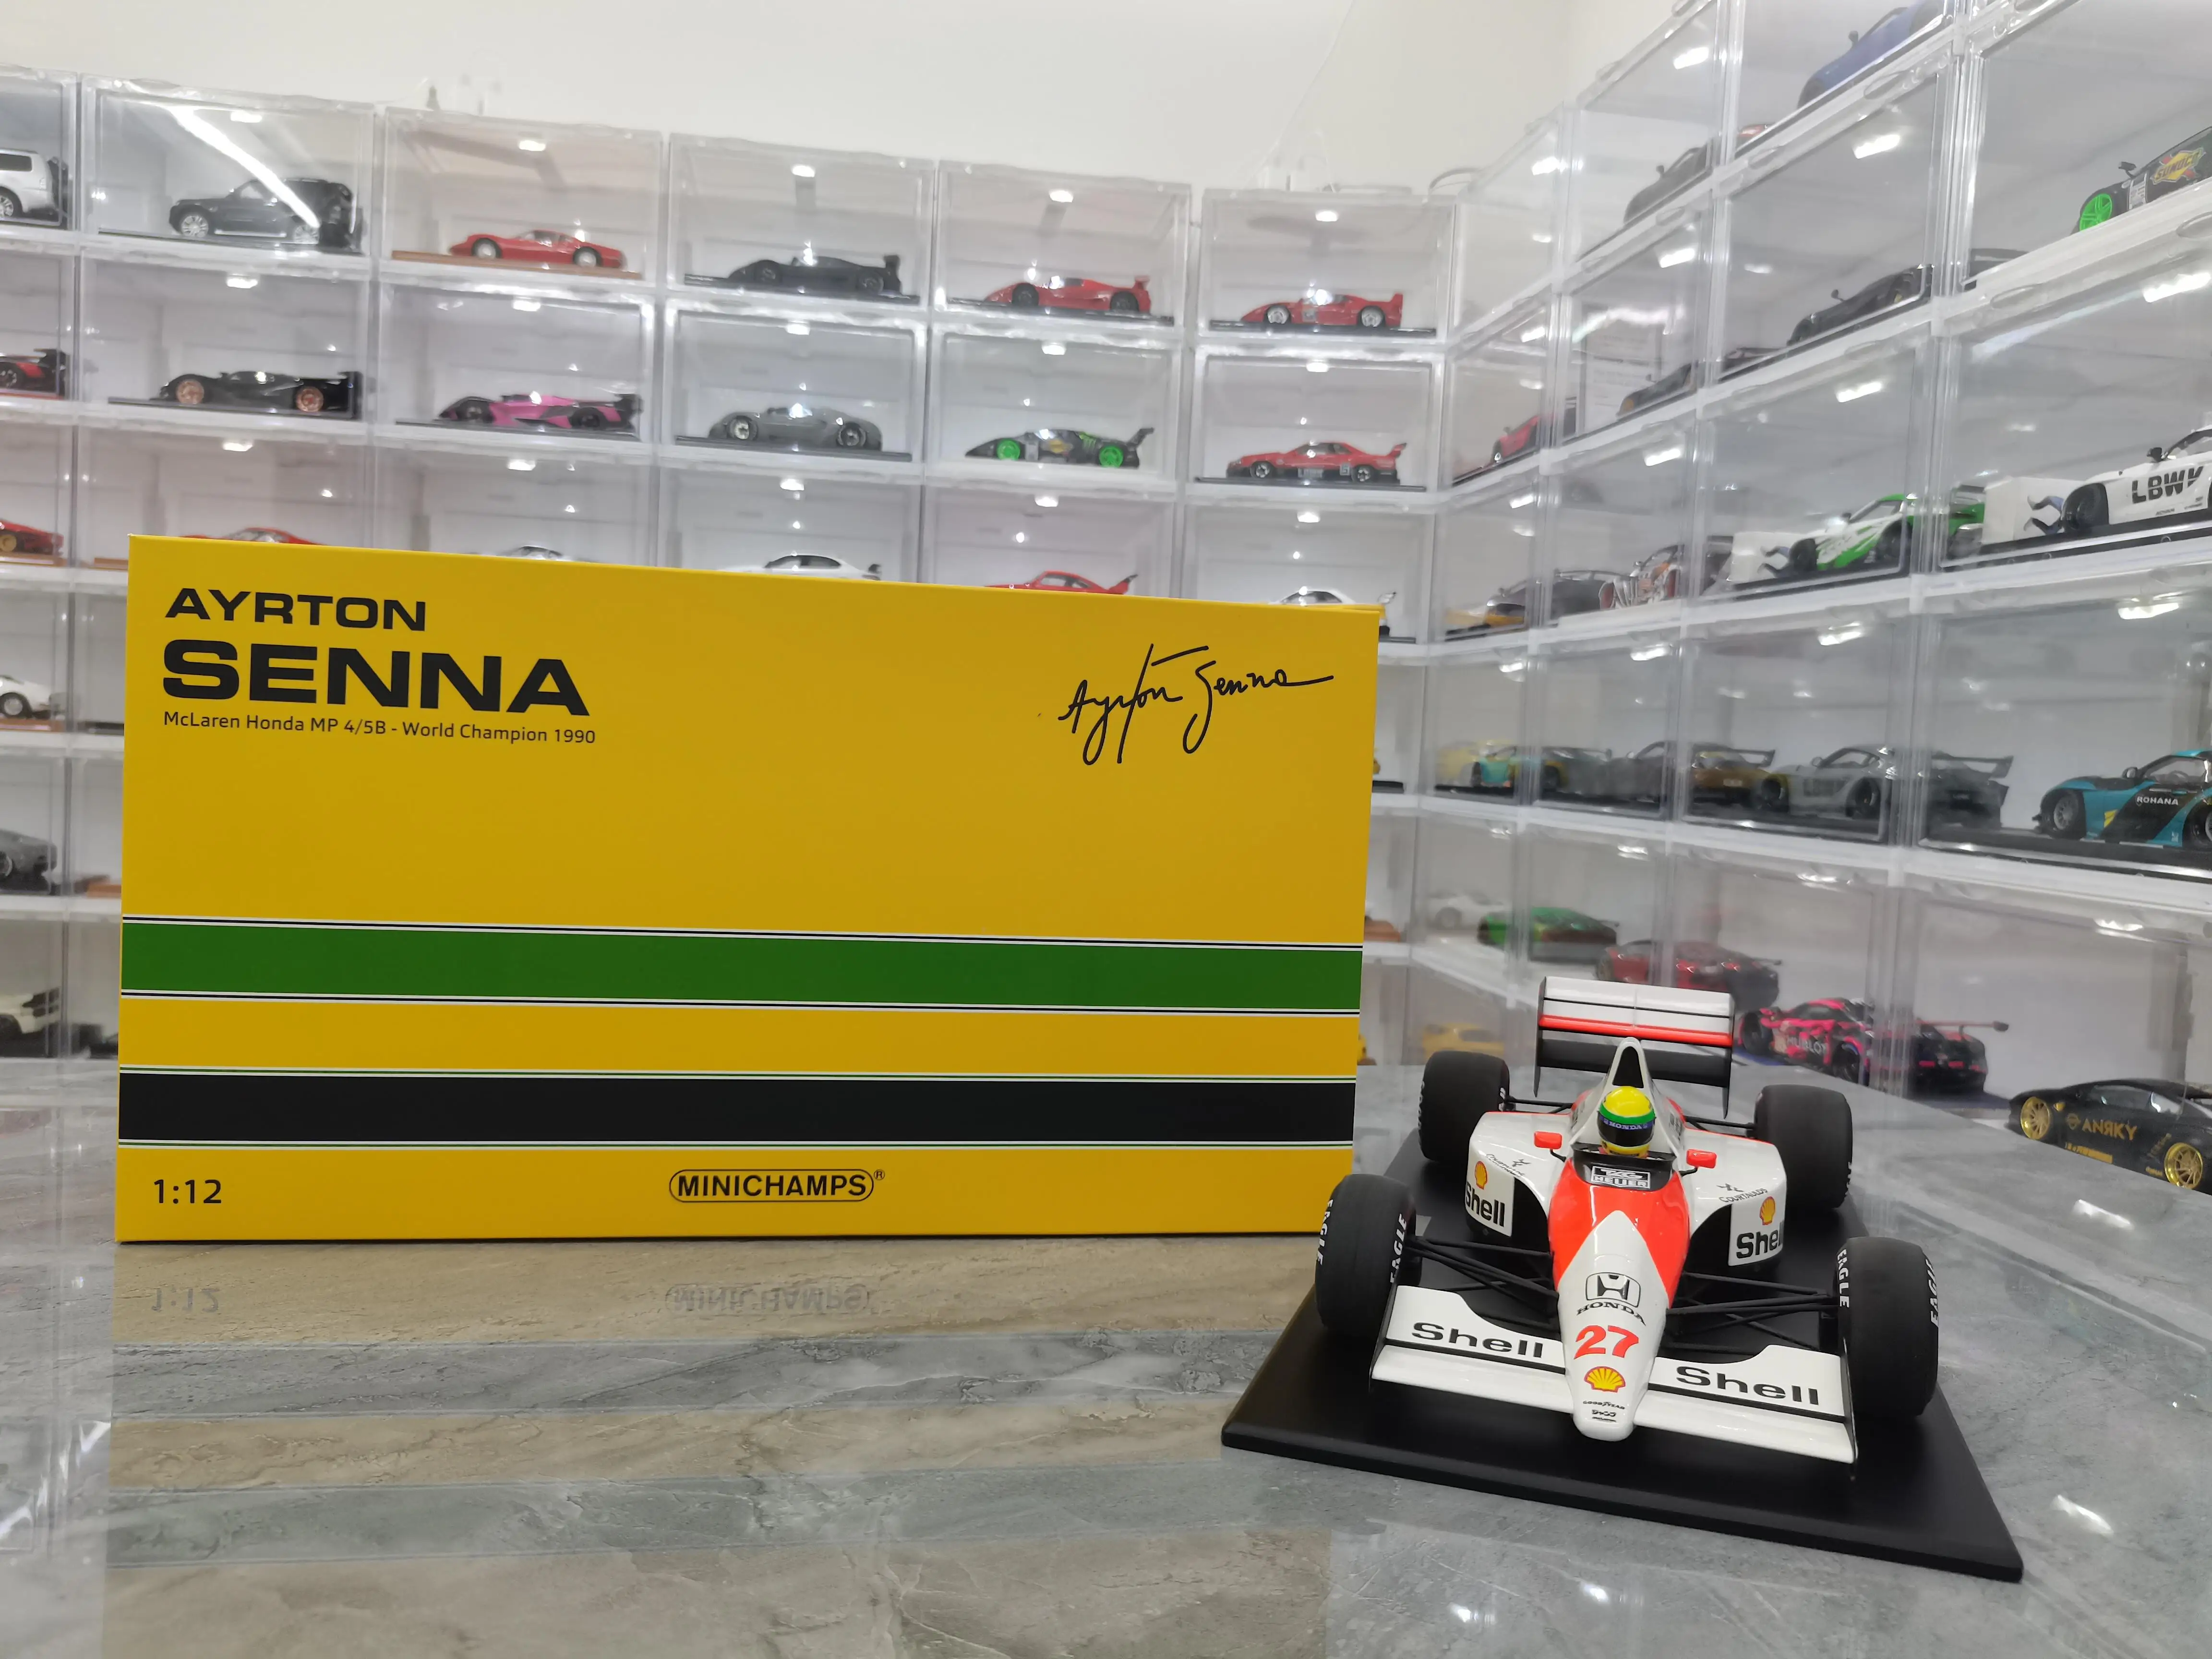 Minichamps 1:12 F1 McLaren MP4 5B Senna NO.27 Limited Edition Resin Metal  Static Car Model Toy Gift